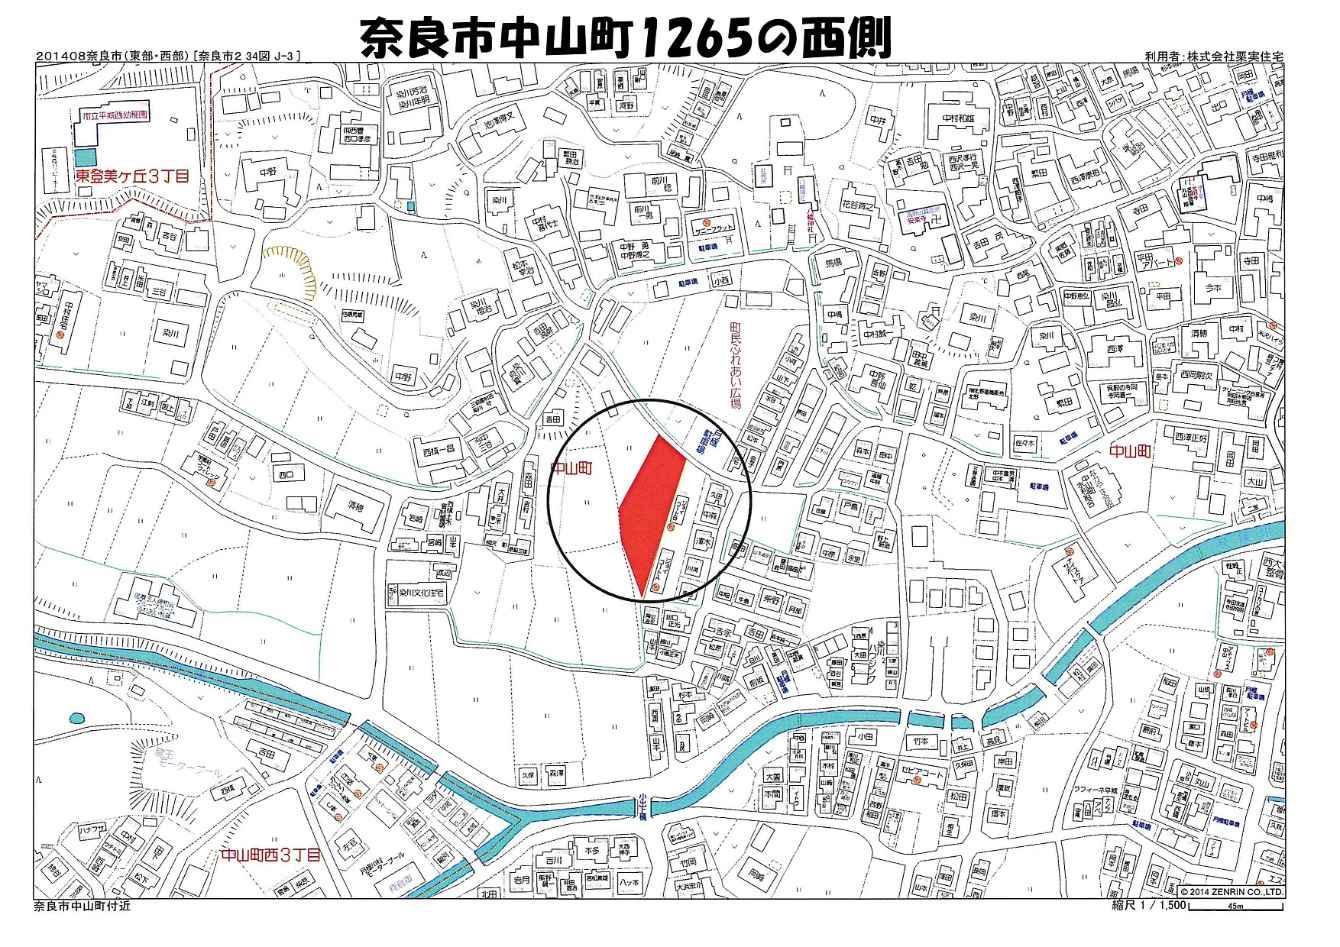 SALE ゼンリンの住宅地図 奈良市 drenriquejmariani.com